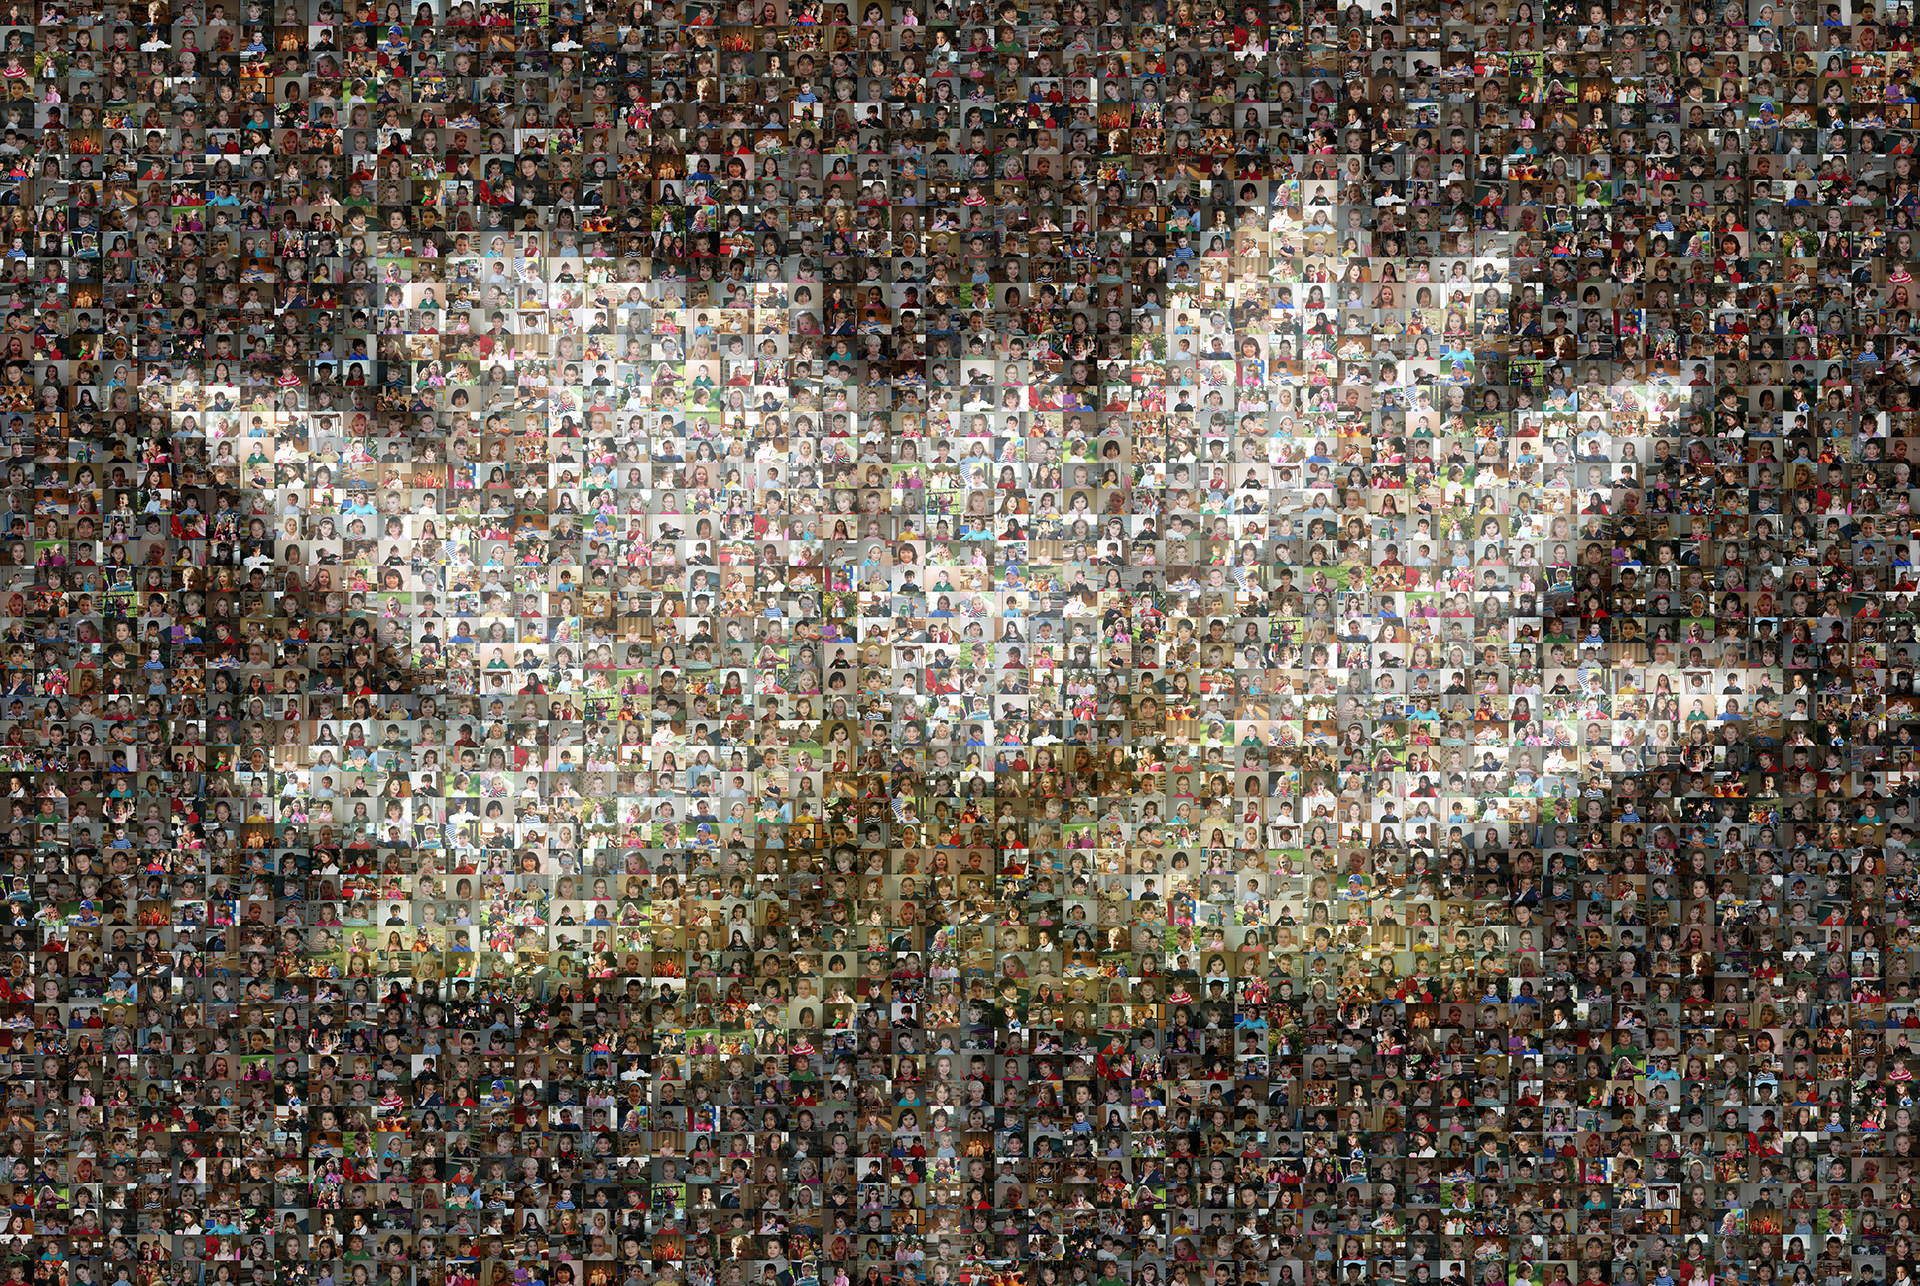 photo mosaic created using 333 school student portraits